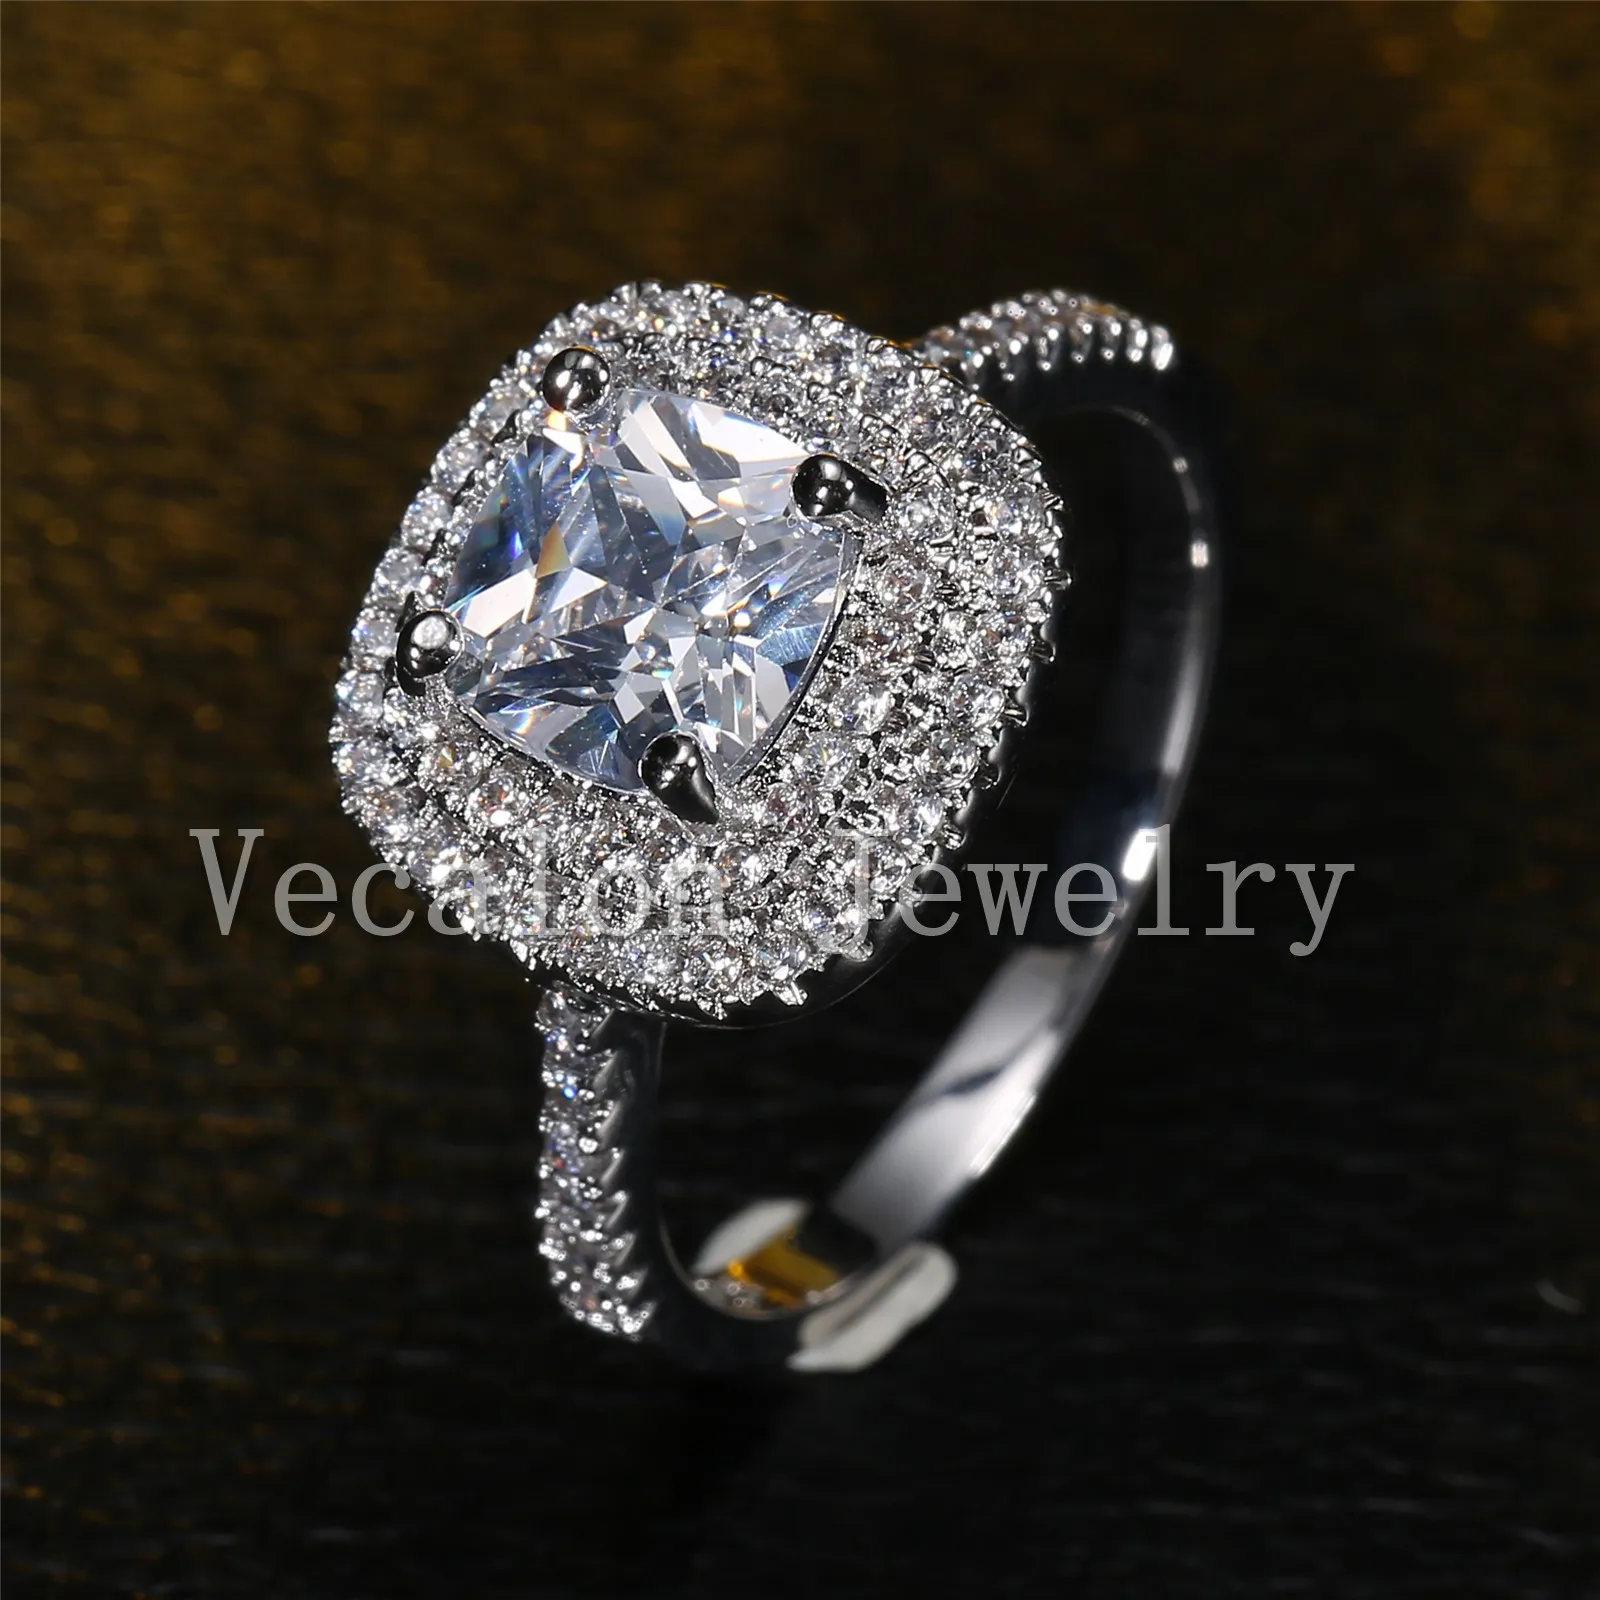 Vecalon 2016 패션 디자인 여성을위한 패션 디자인 약혼 결혼 반지 3CT 시뮬레이션 된 다이아몬드 CZ 925 스털링 실버 여성 밴드 반지